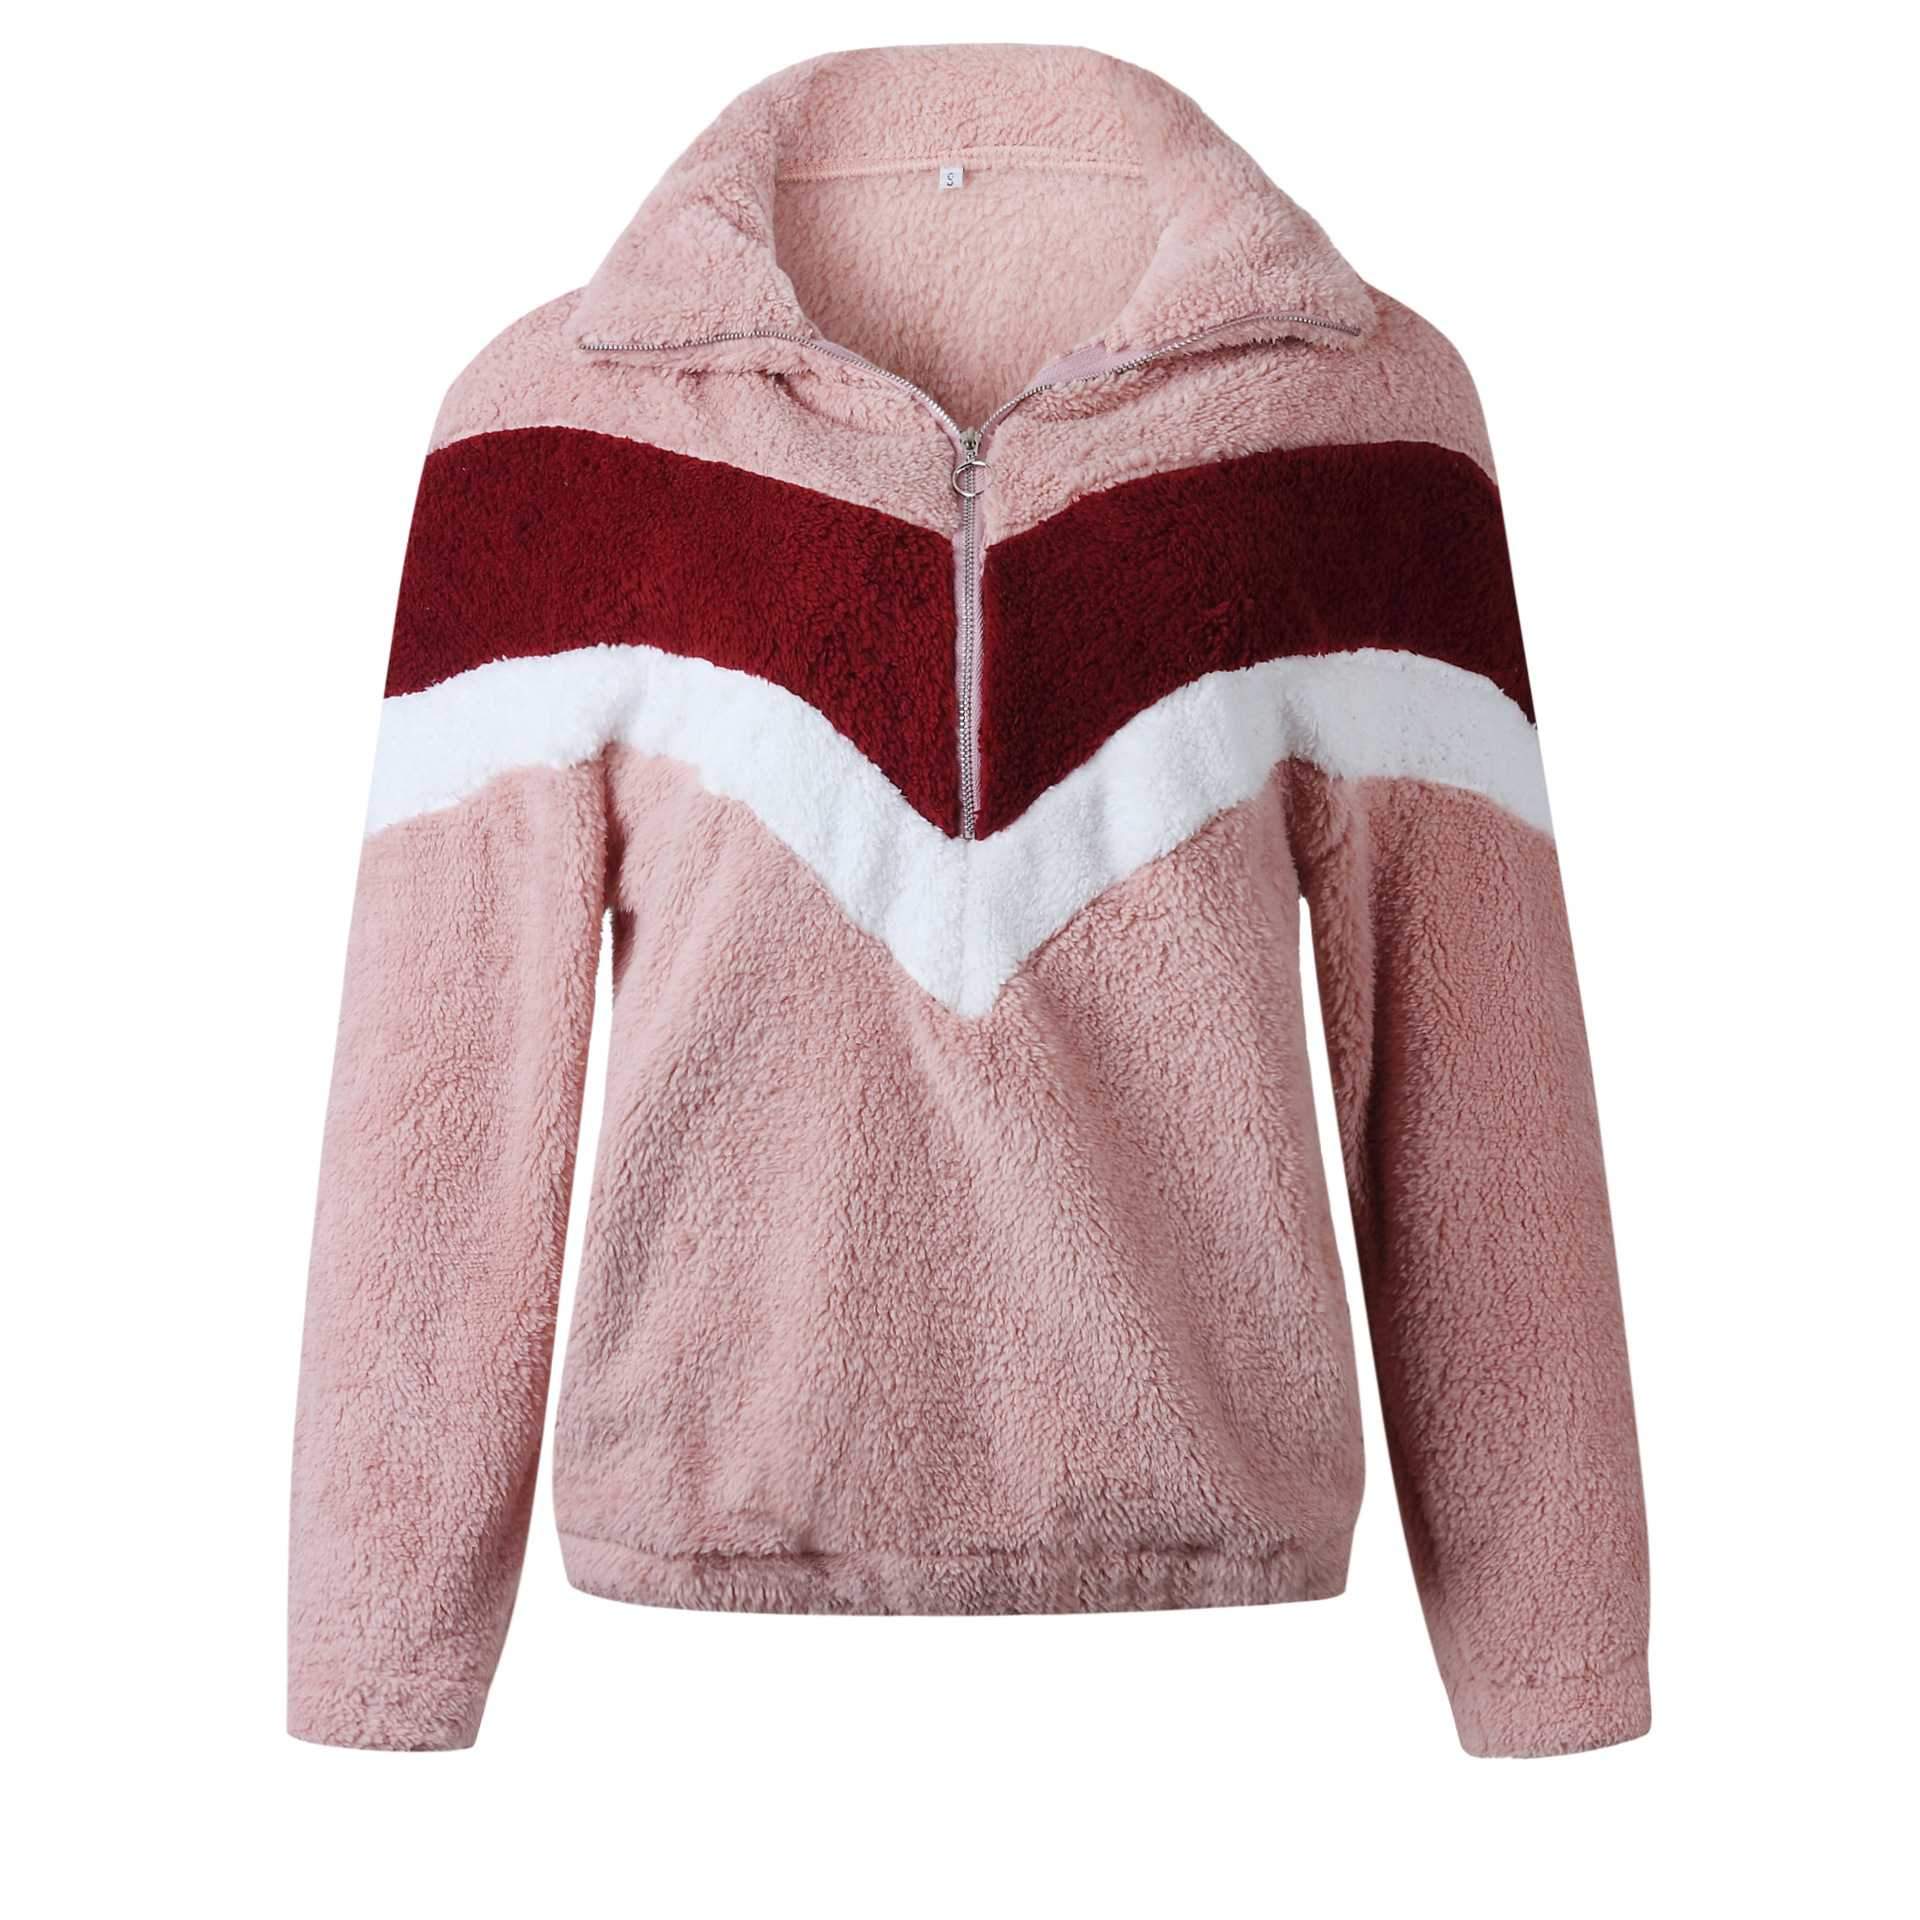 Cozy Colorblock Chevron Half Zip Sherpa Pullover Faux Fur Sweatshirt Jacket on sale - SOUISEE